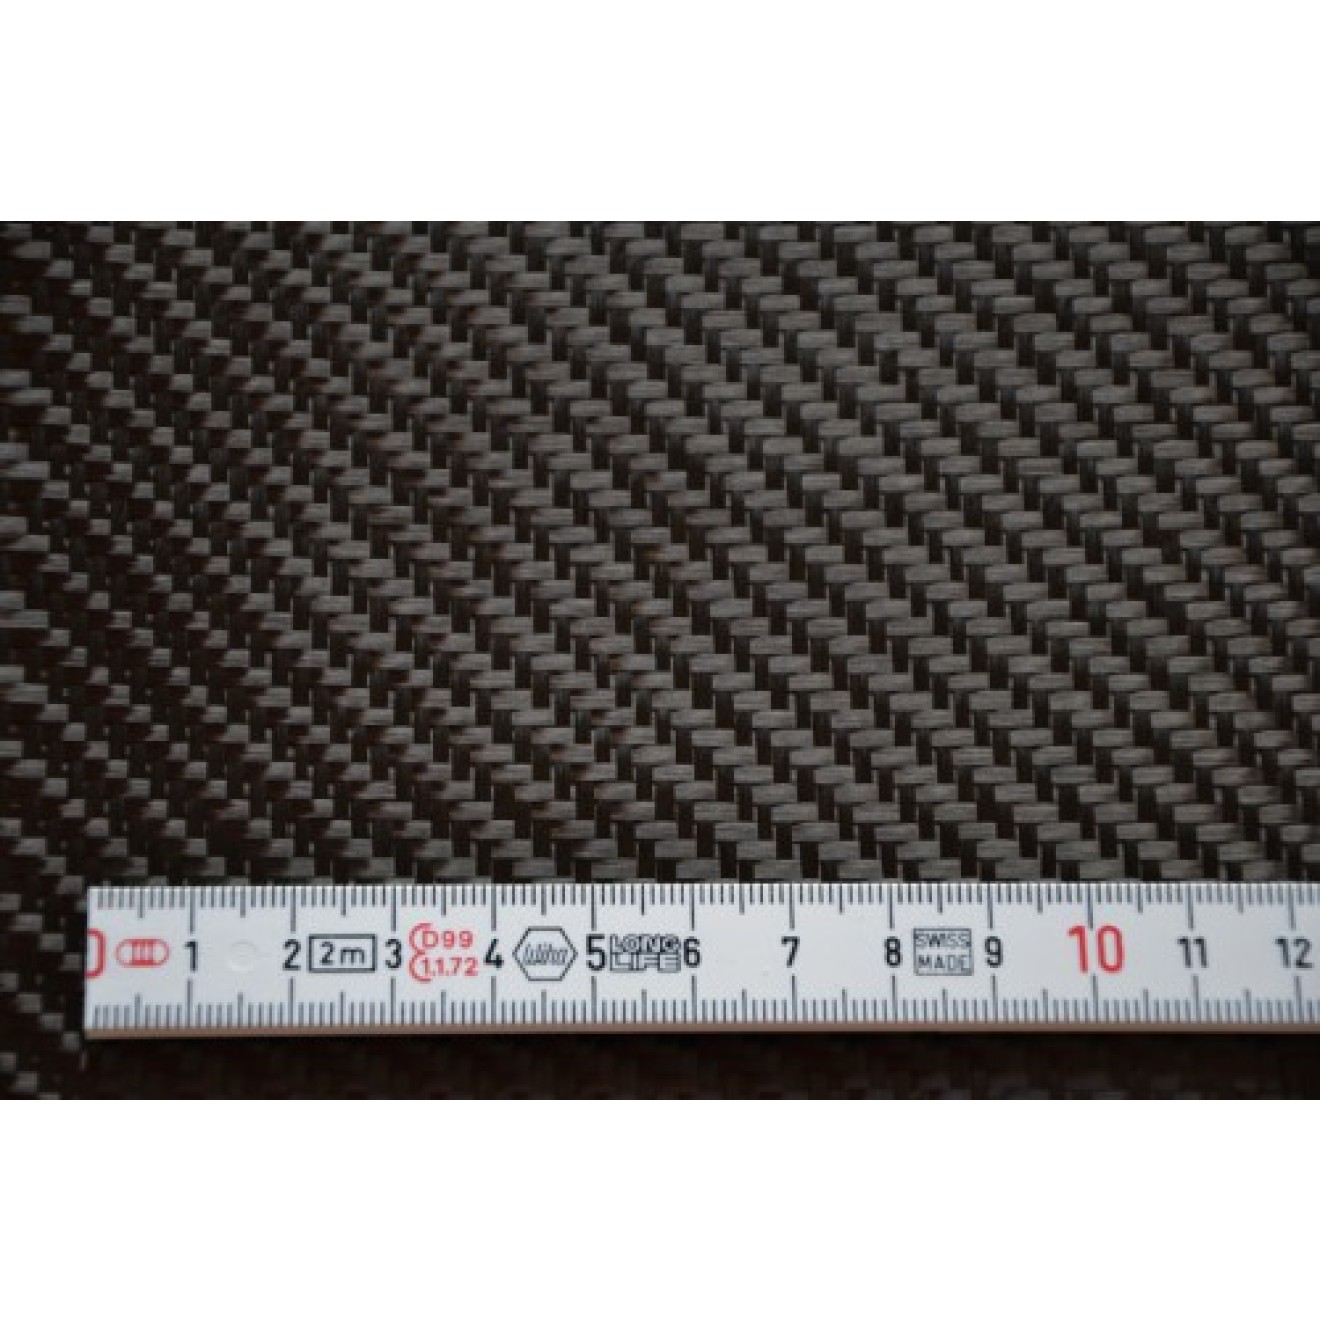 Woven carbon fiber fabric 3K 200g/m² twill2/2, roll length 100m